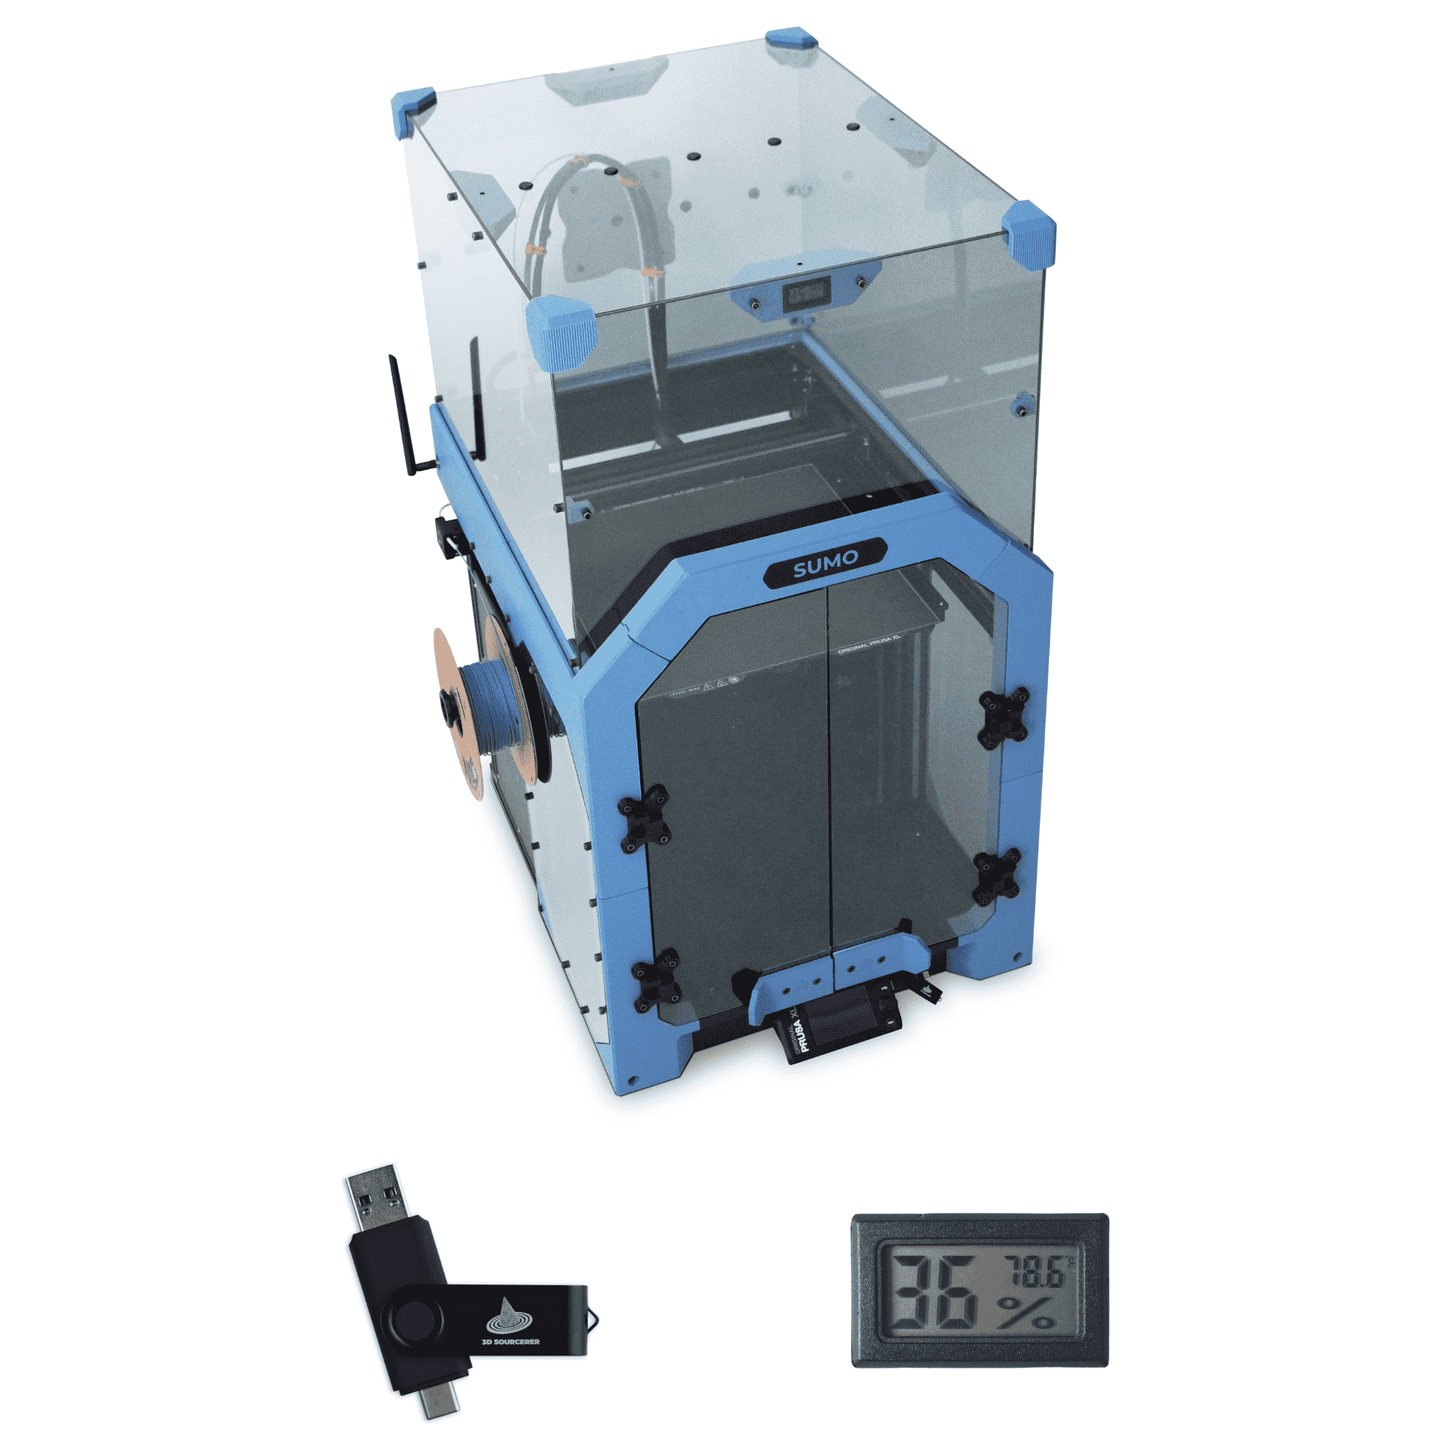 SUMO 3D Printer Enclosure Kit for the Prusa XL